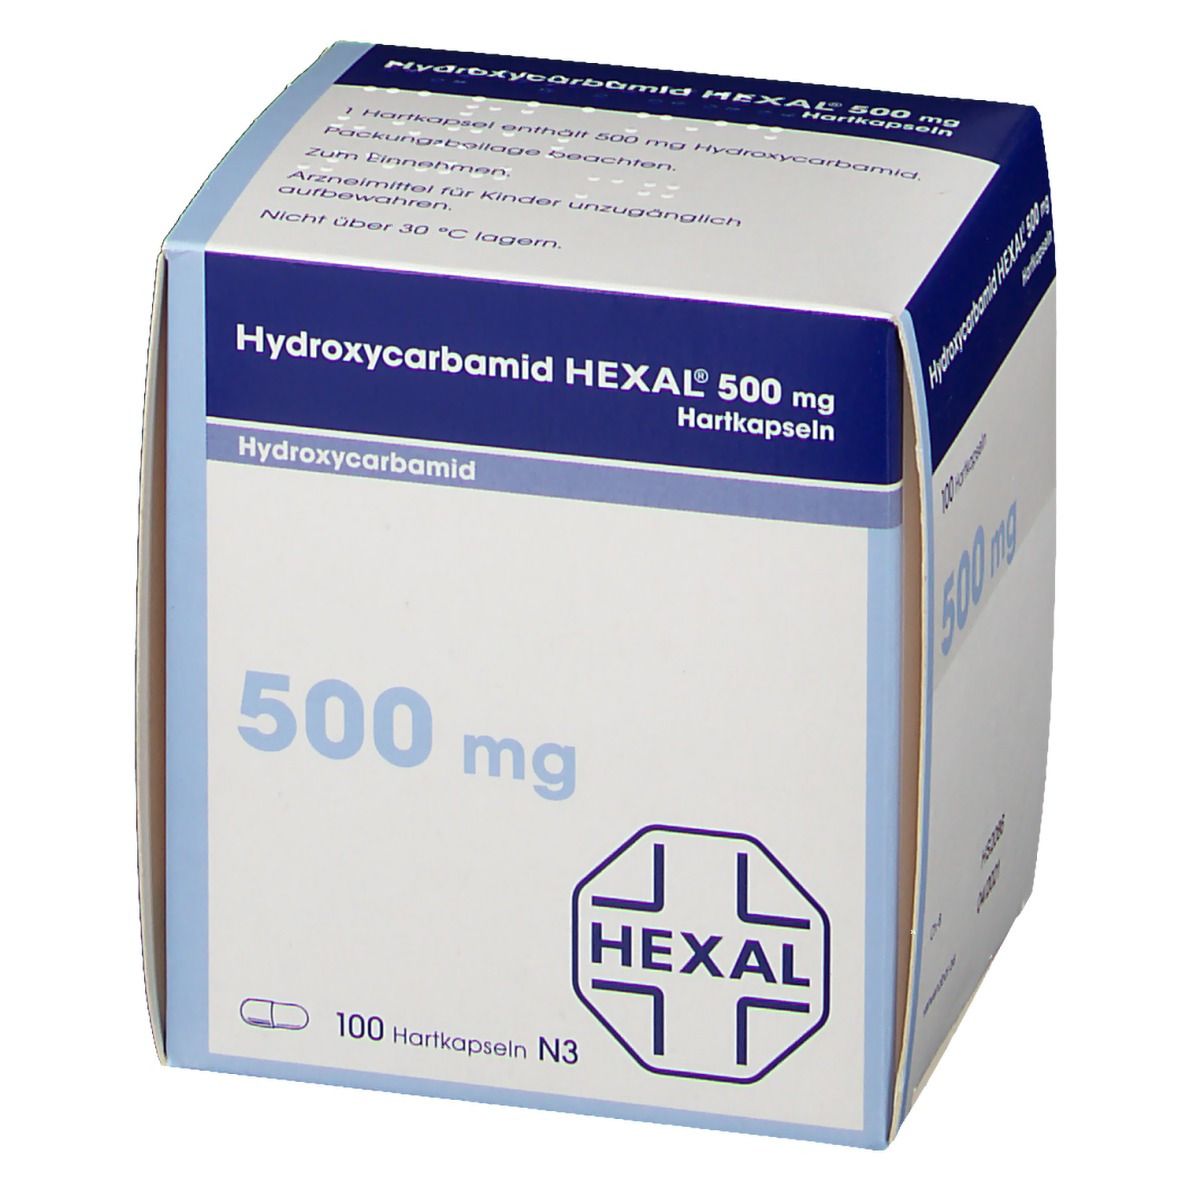 Hydroxycarbamid HEXAL® 500 mg